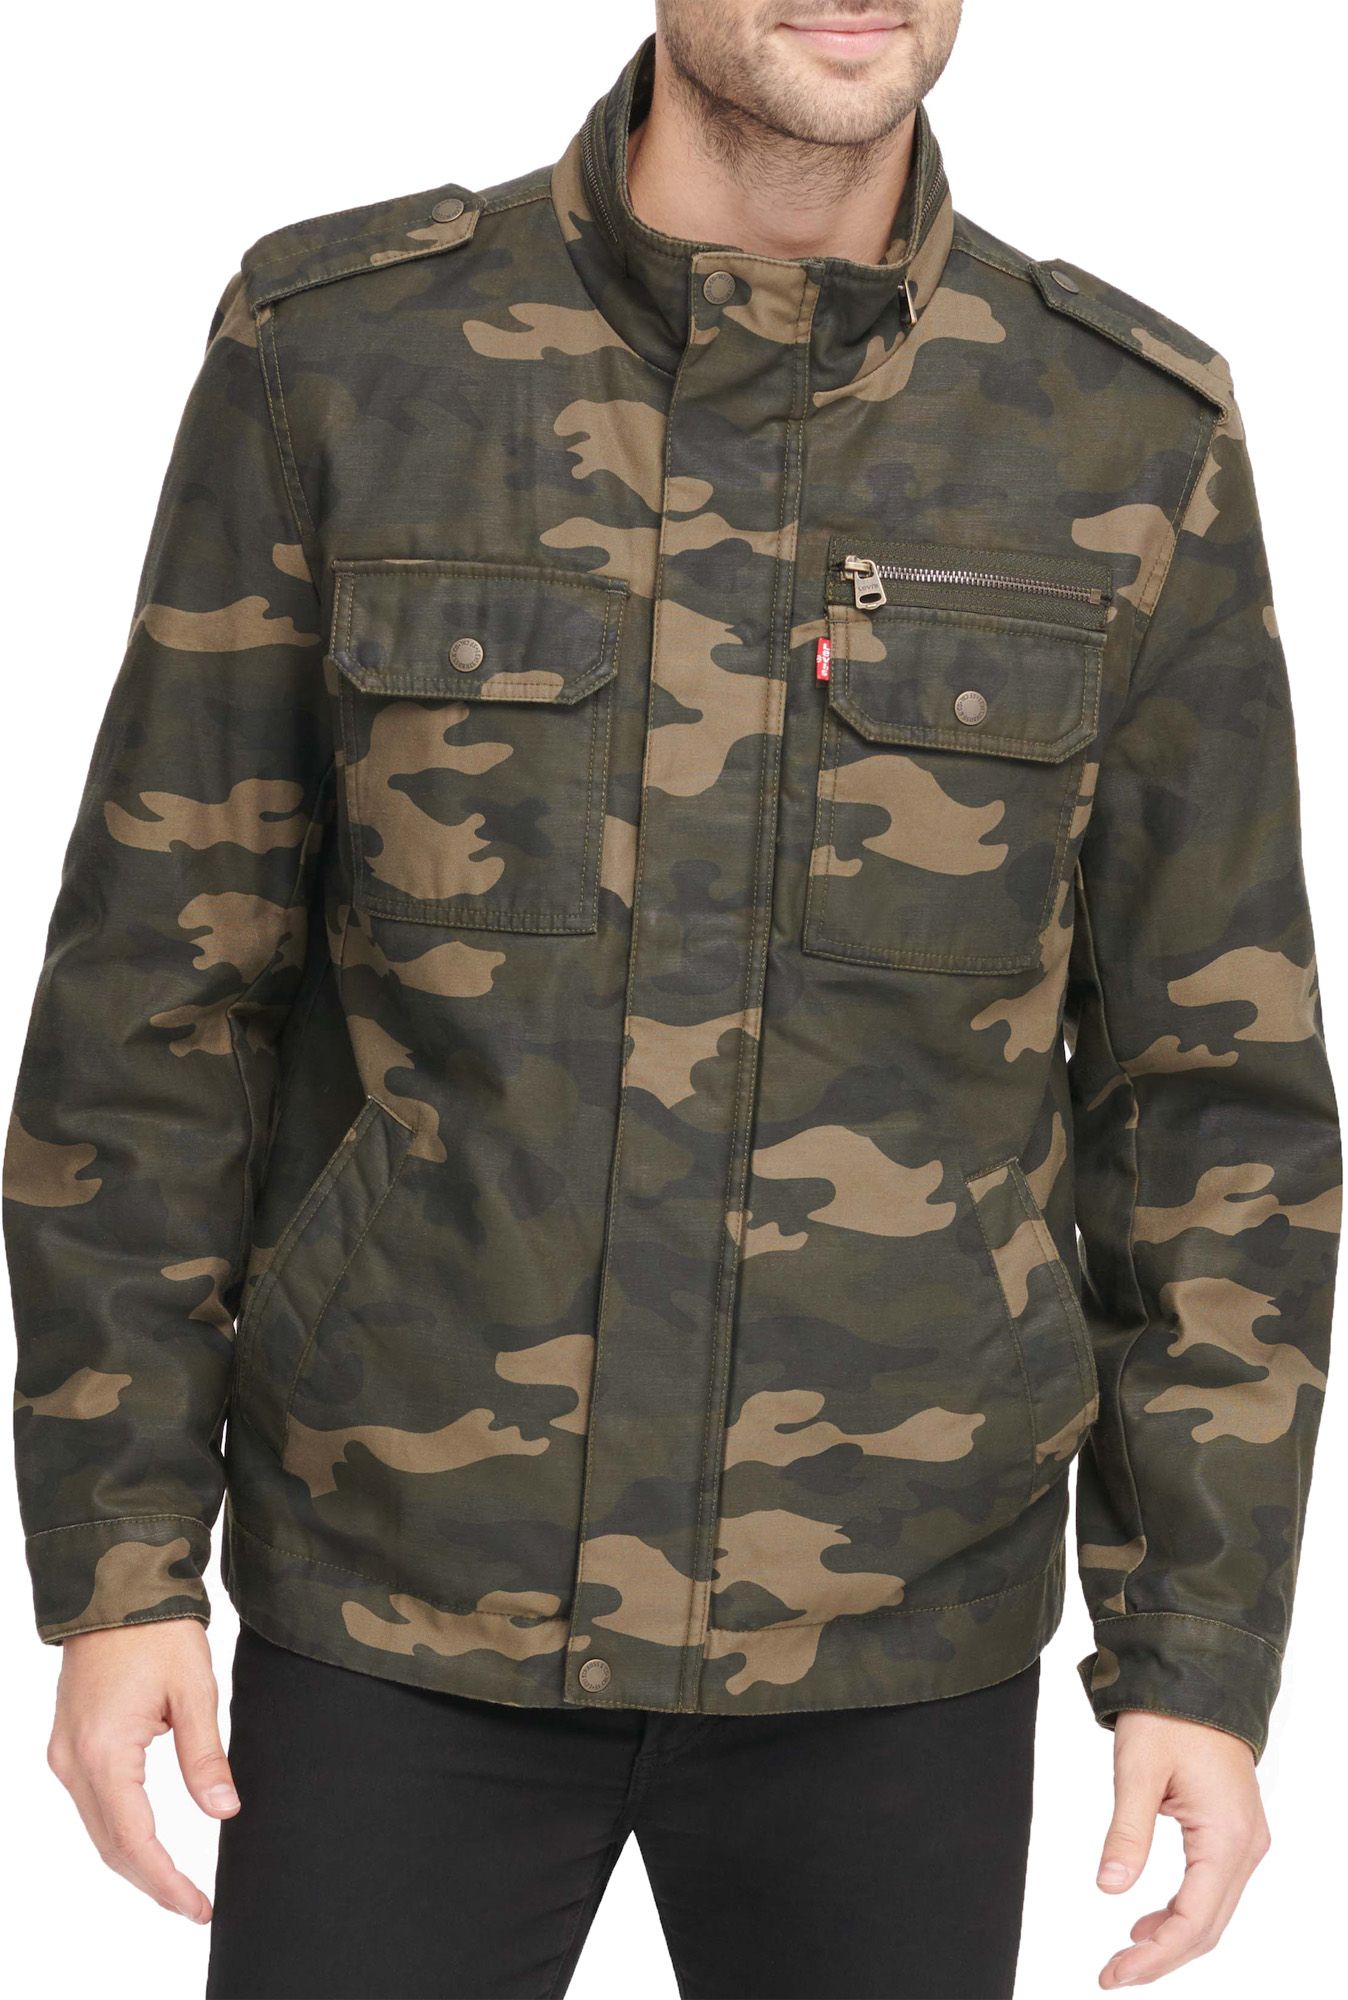 levi's military jacket mens